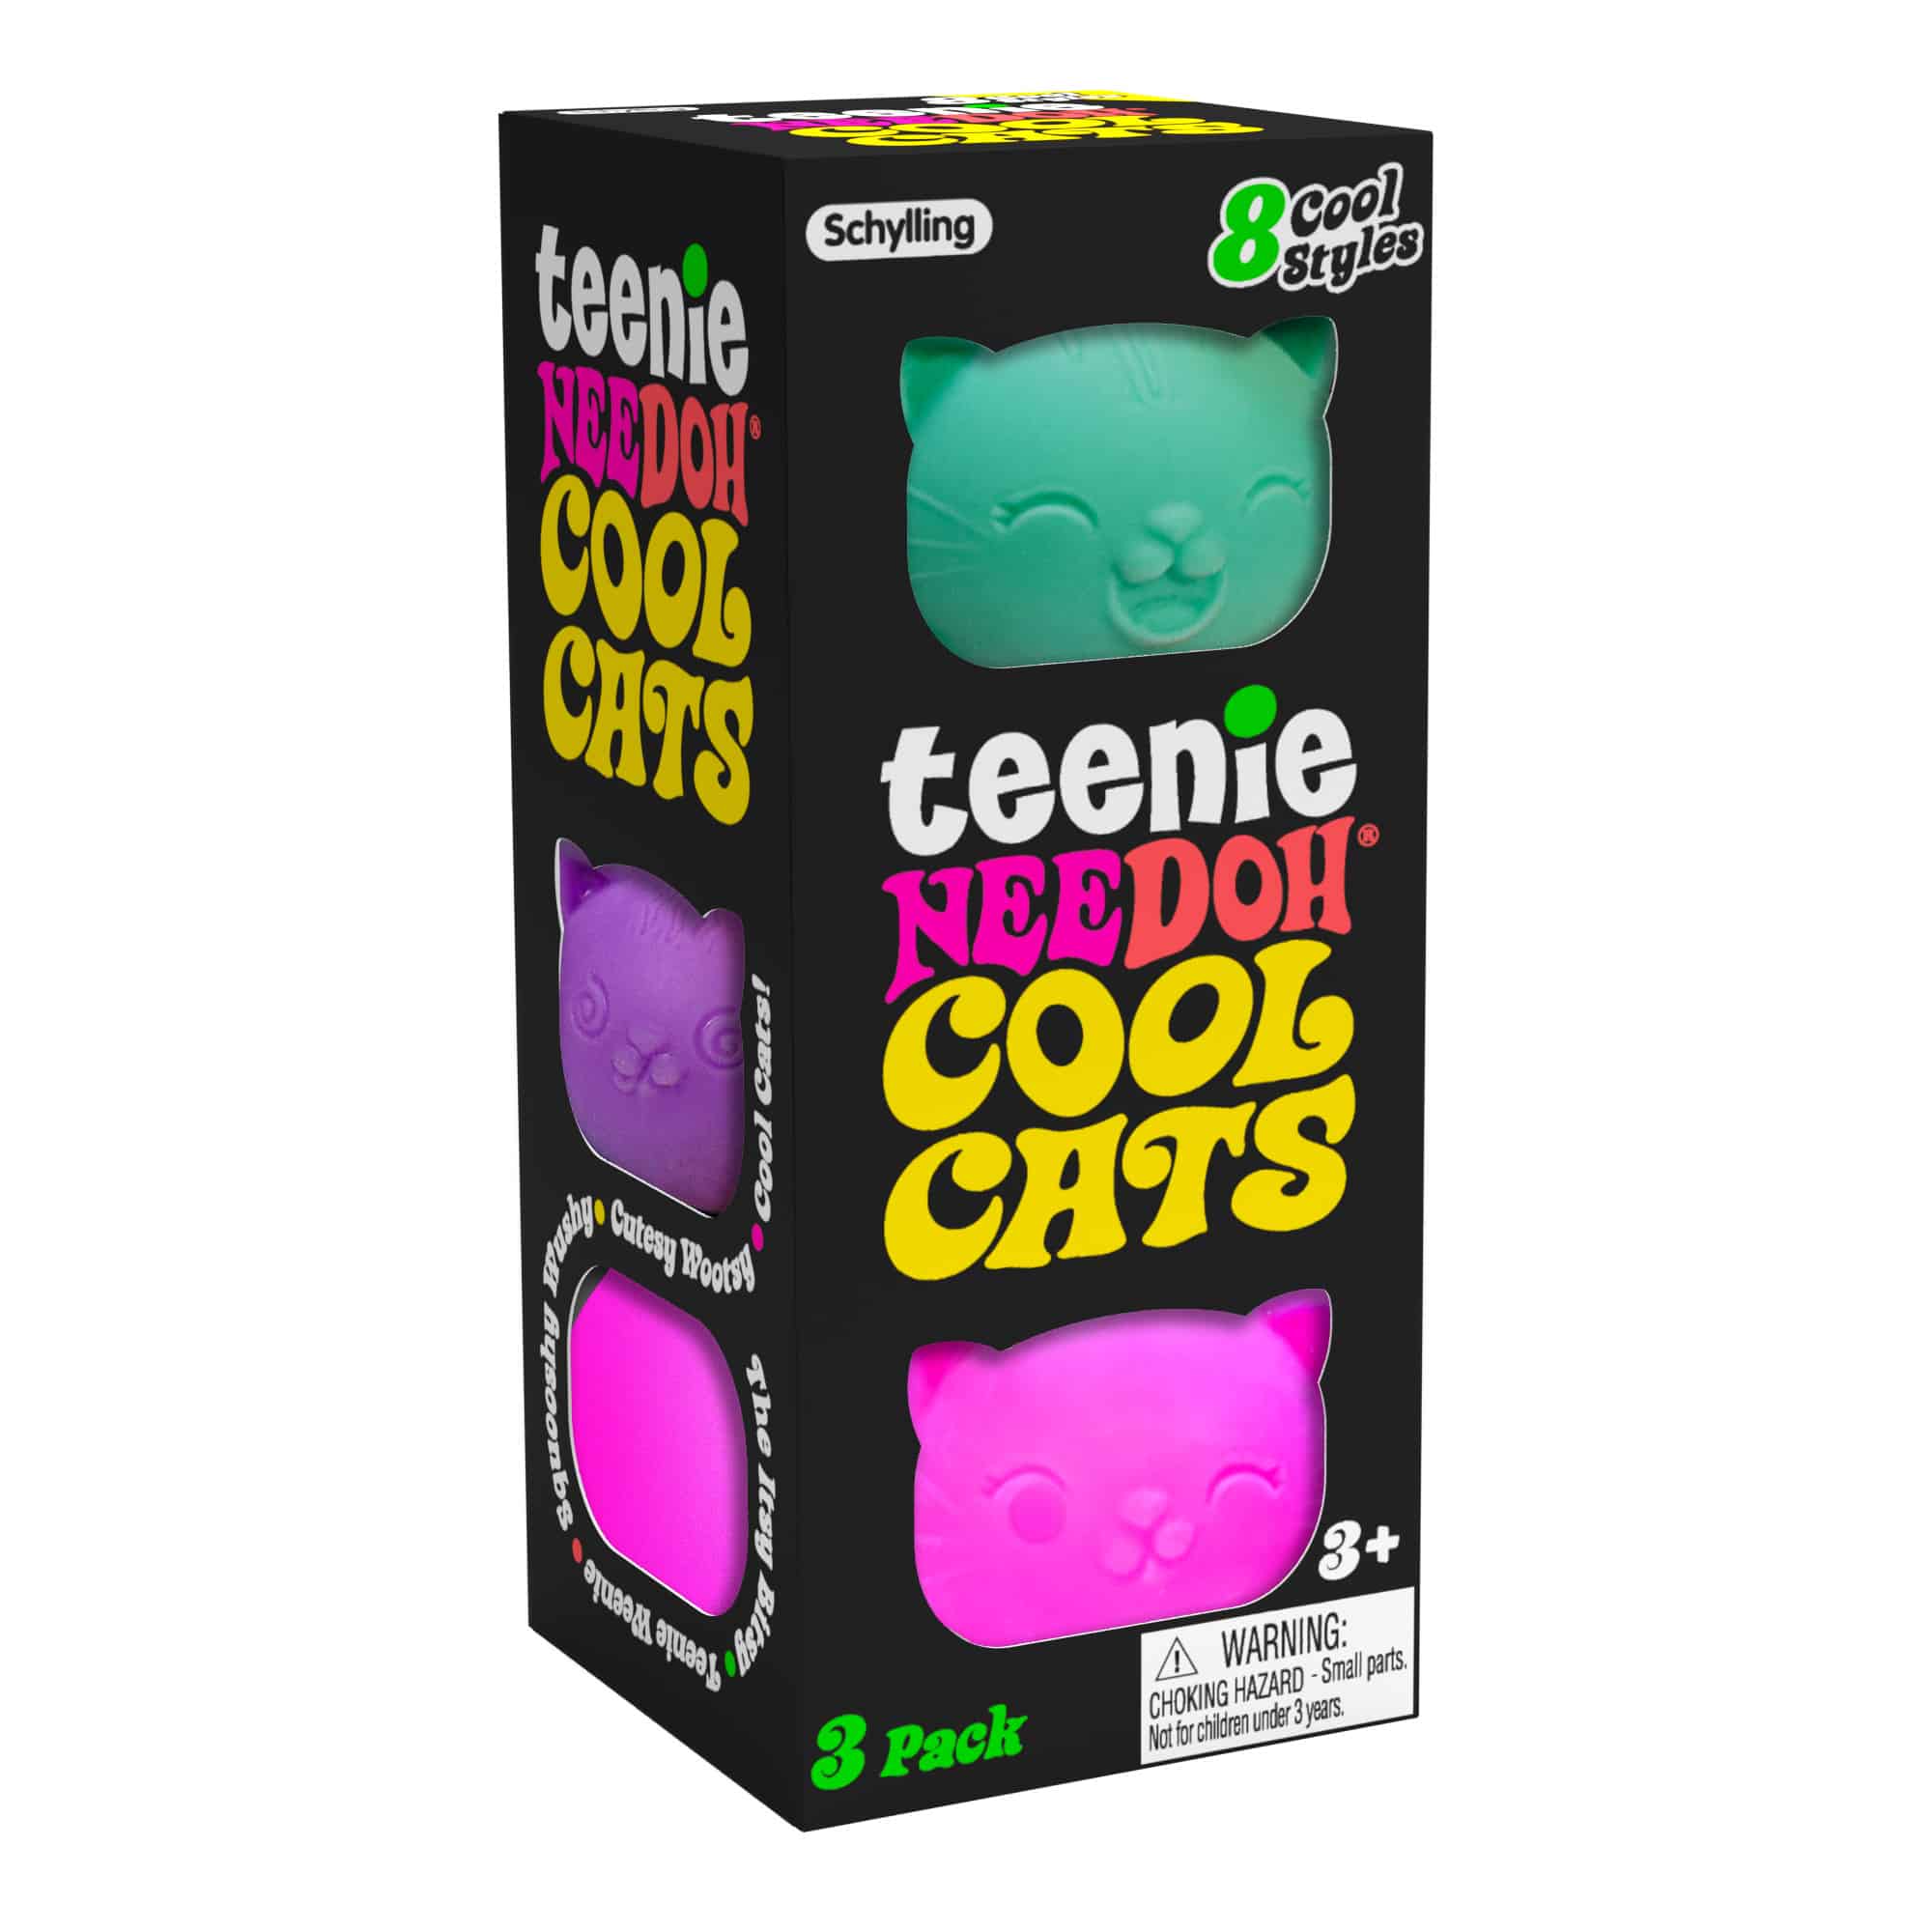 Teenie cool cats